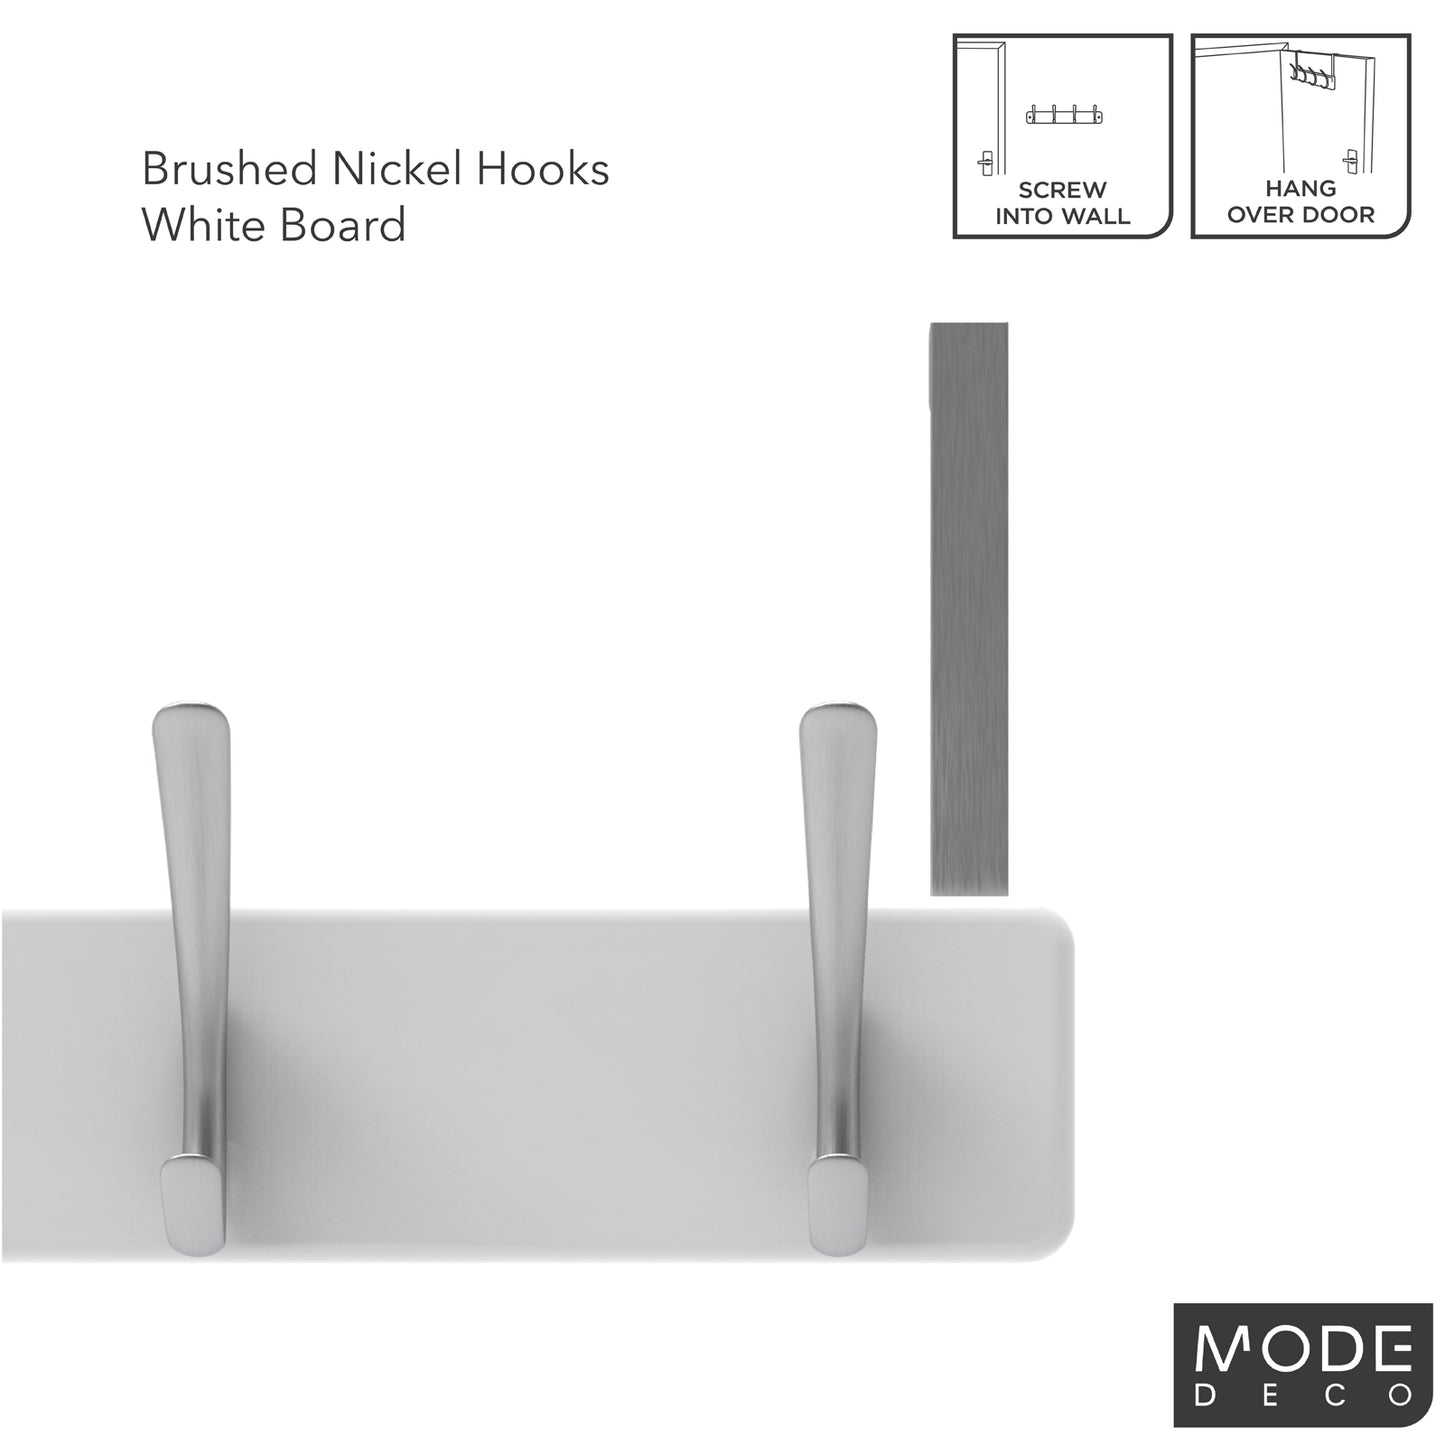 4 Brushed Nickel Hooks on White Board Over Door Hook